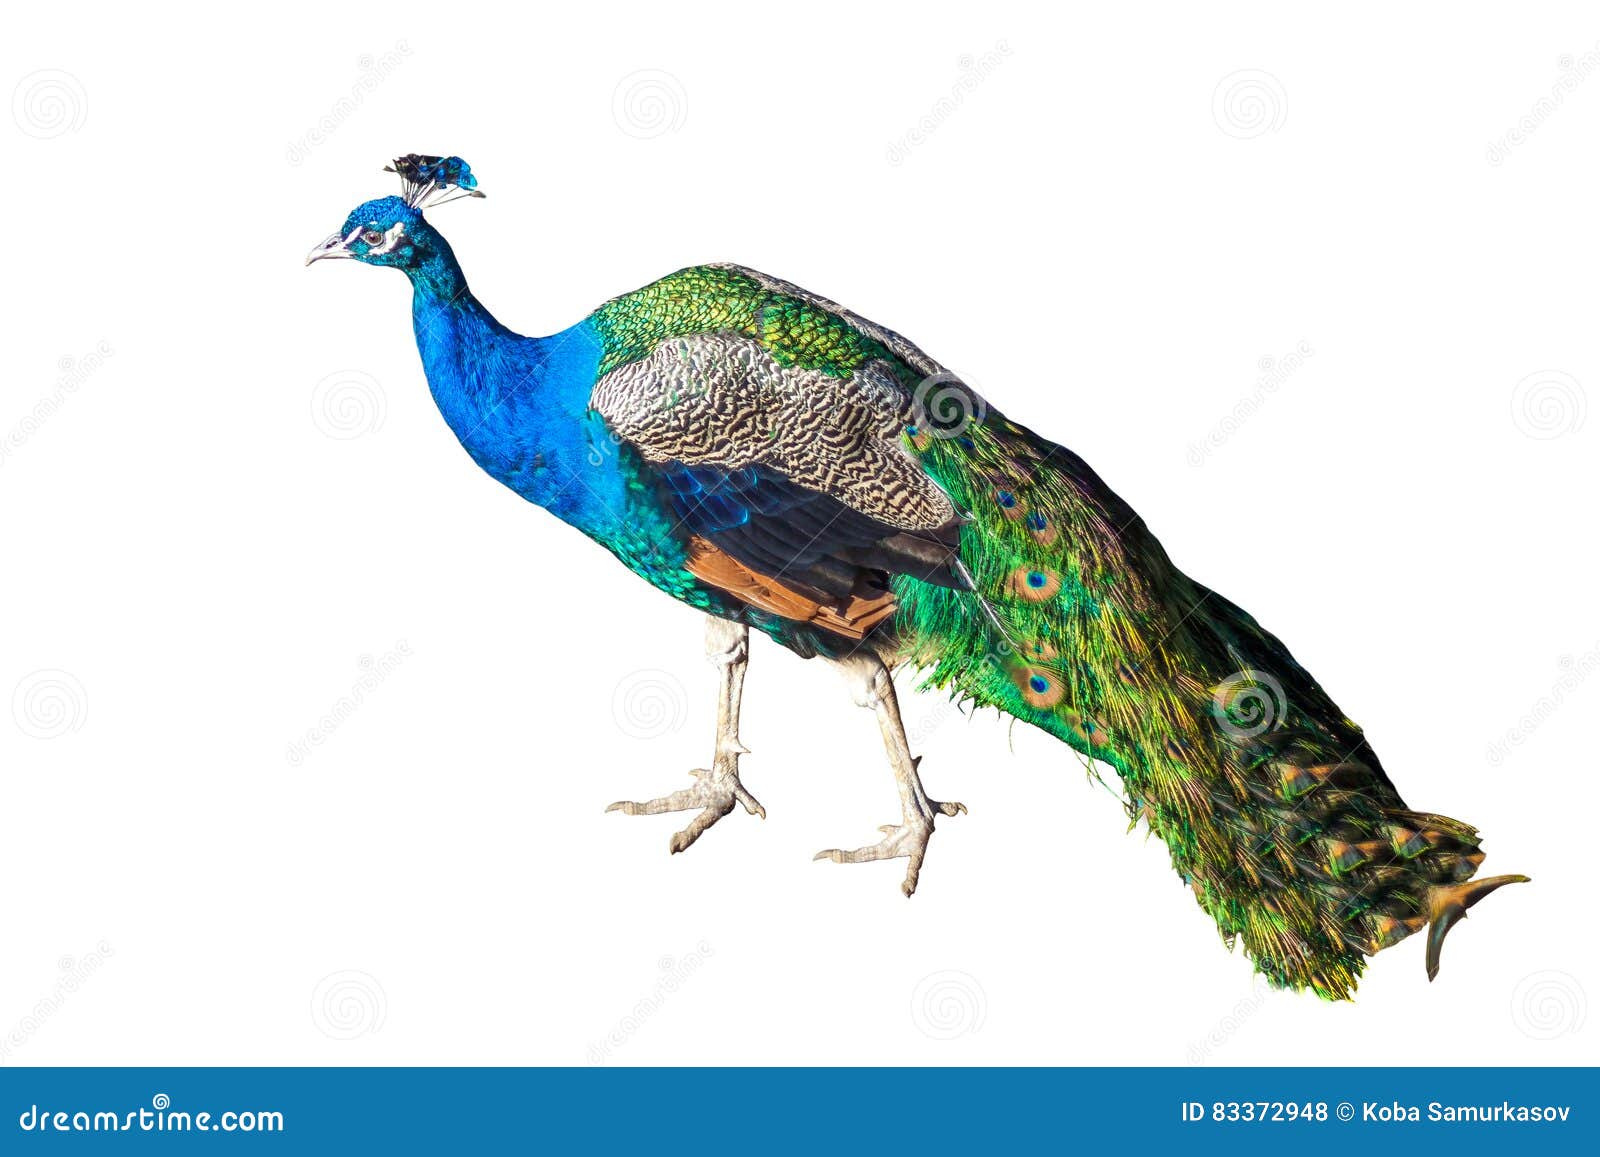 Beautiful Peacock Isolated on White Background Stock Photo - Image ...